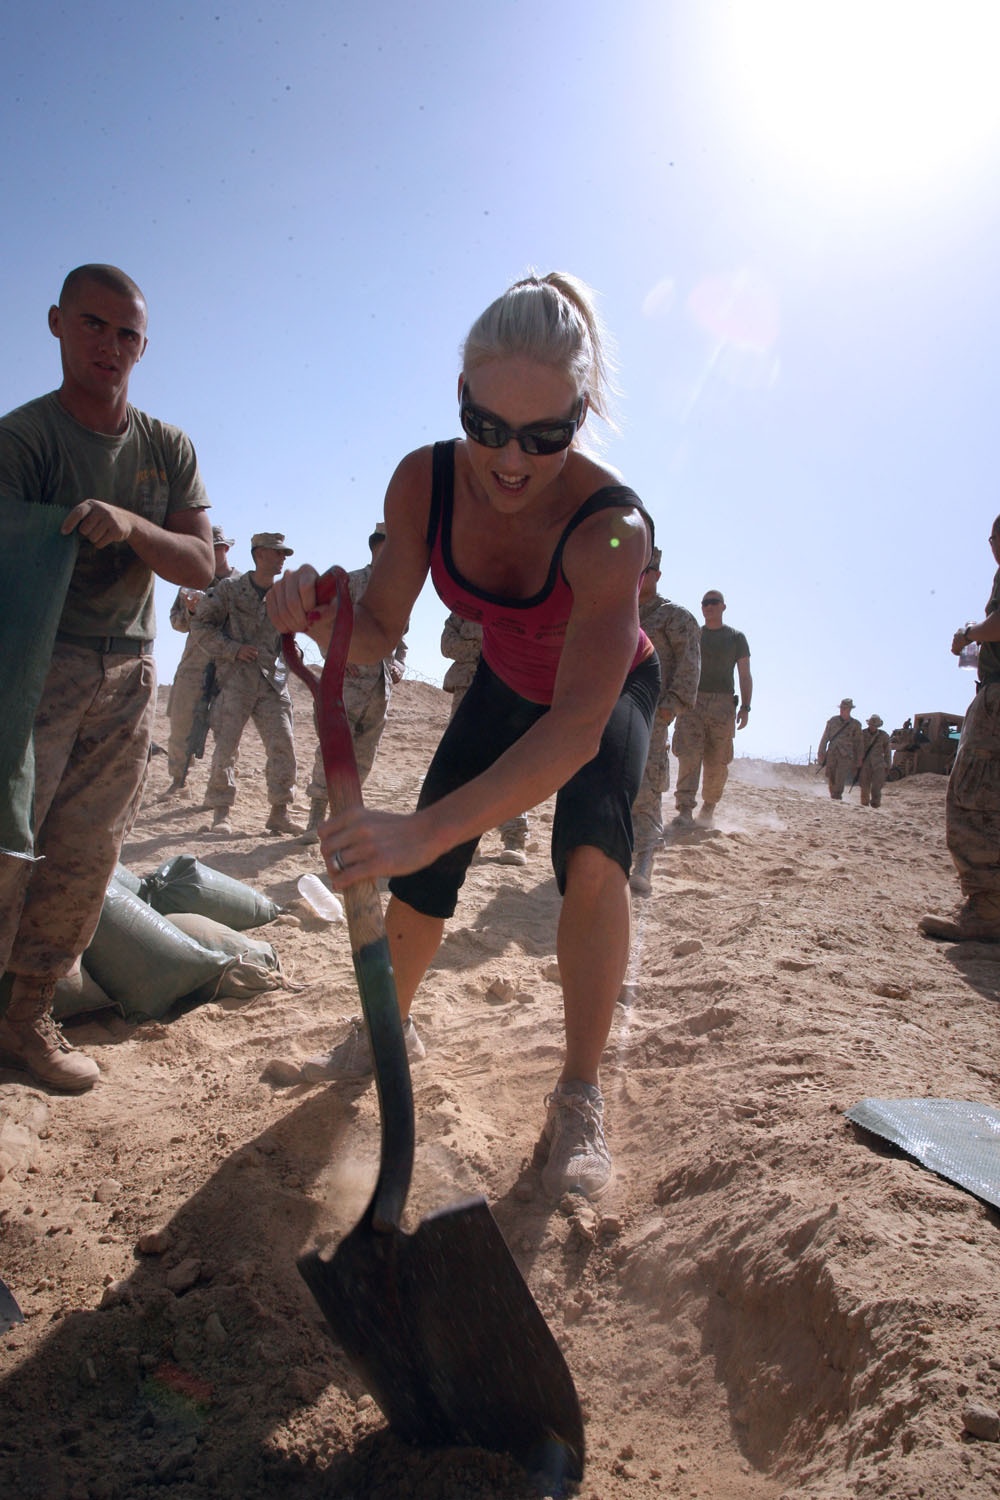 American Gladiators bring fight to Marines